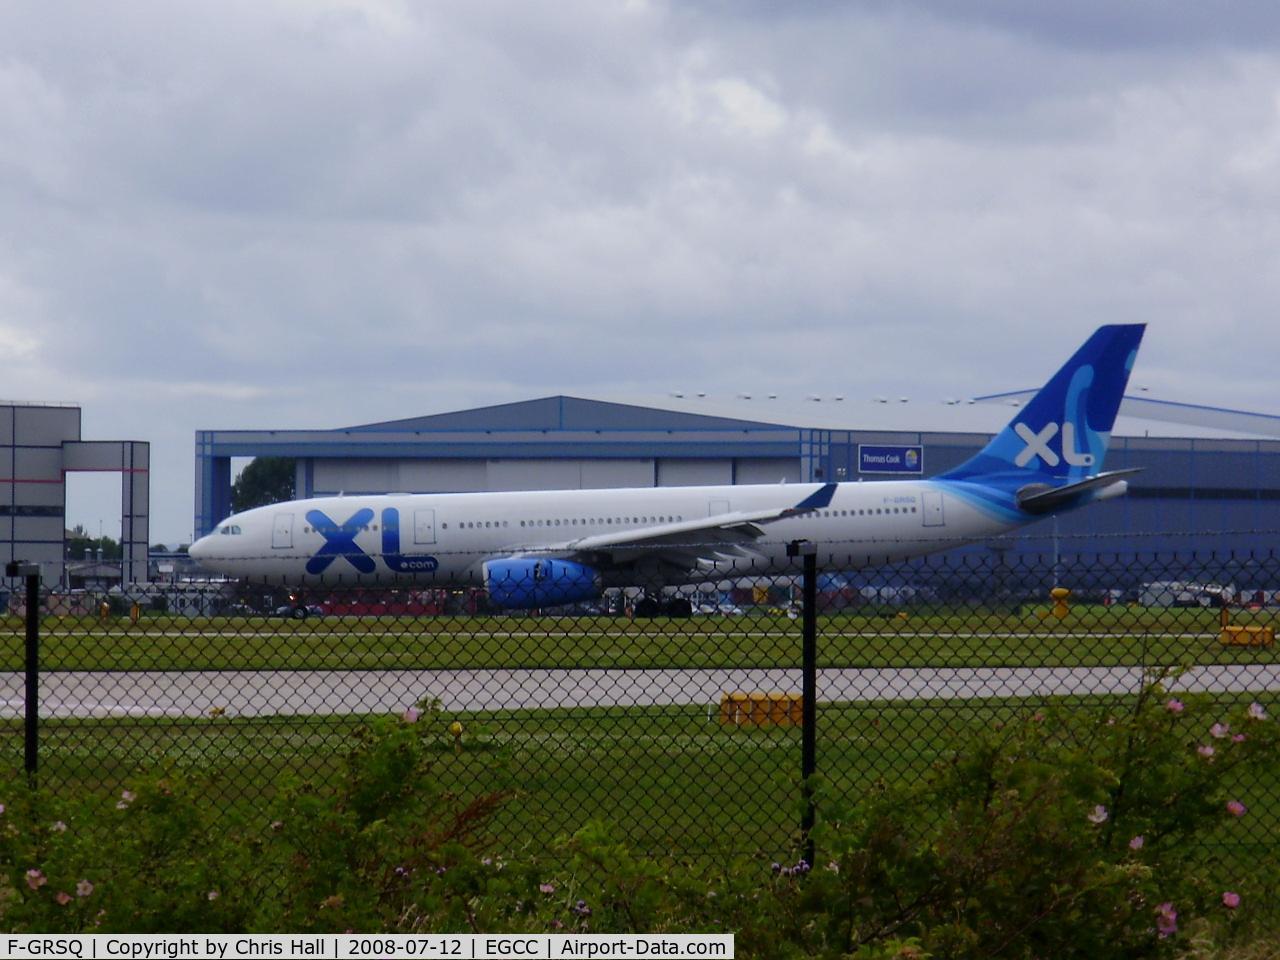 F-GRSQ, 2002 Airbus A330-243 C/N 501, XL Airways